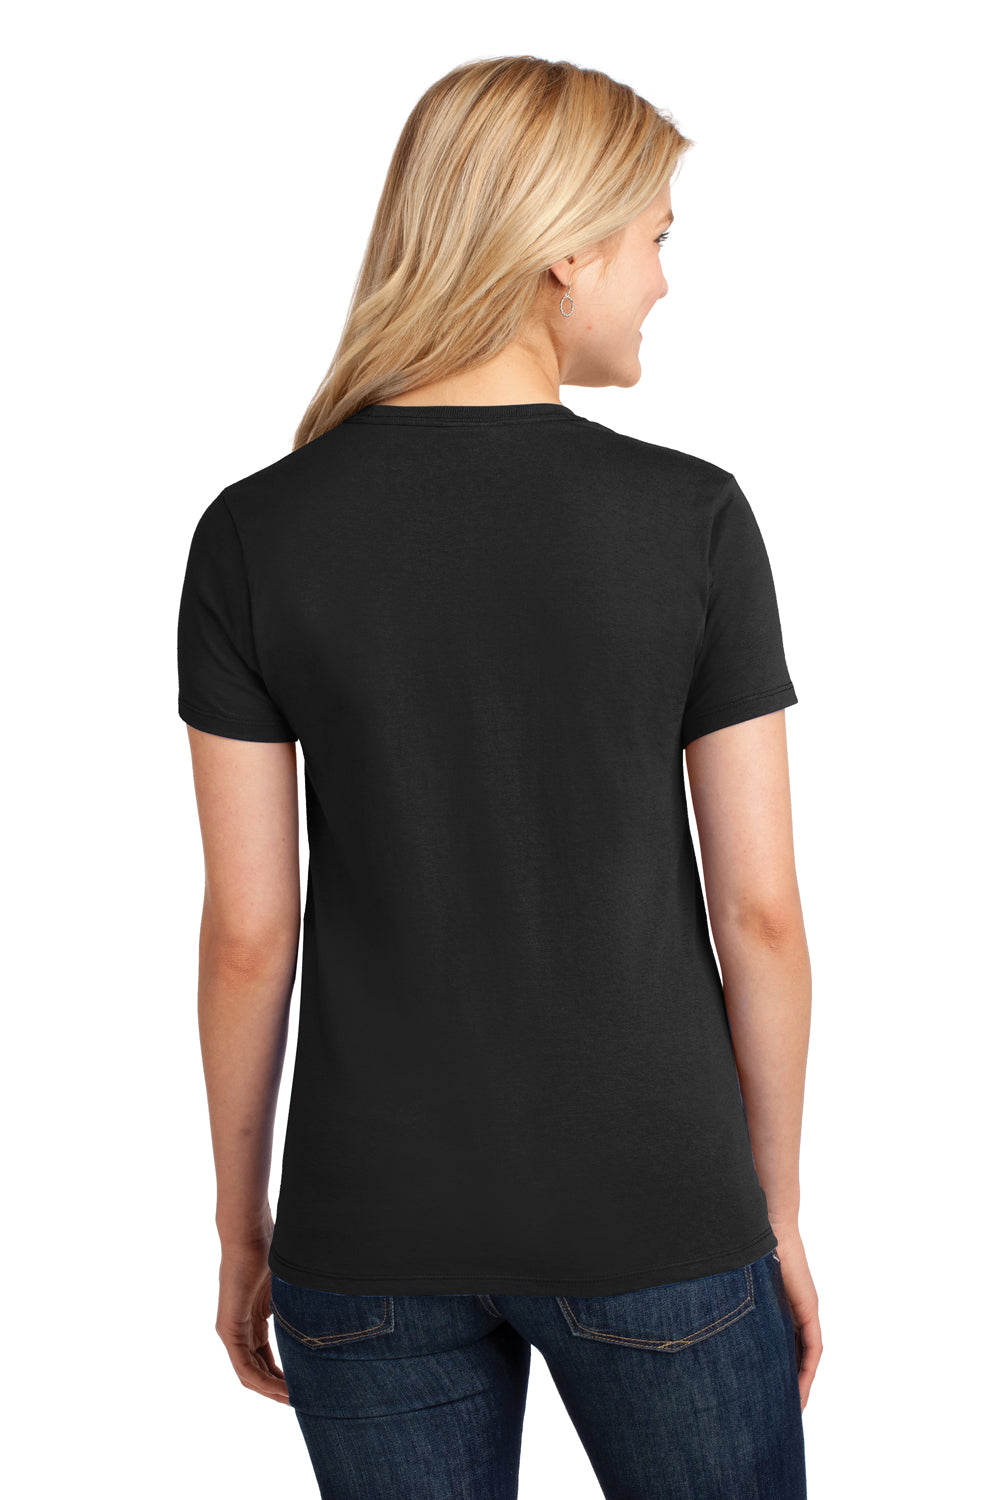 Port & Company LPC54 Womens Core Short Sleeve Crewneck T-Shirt Black Back